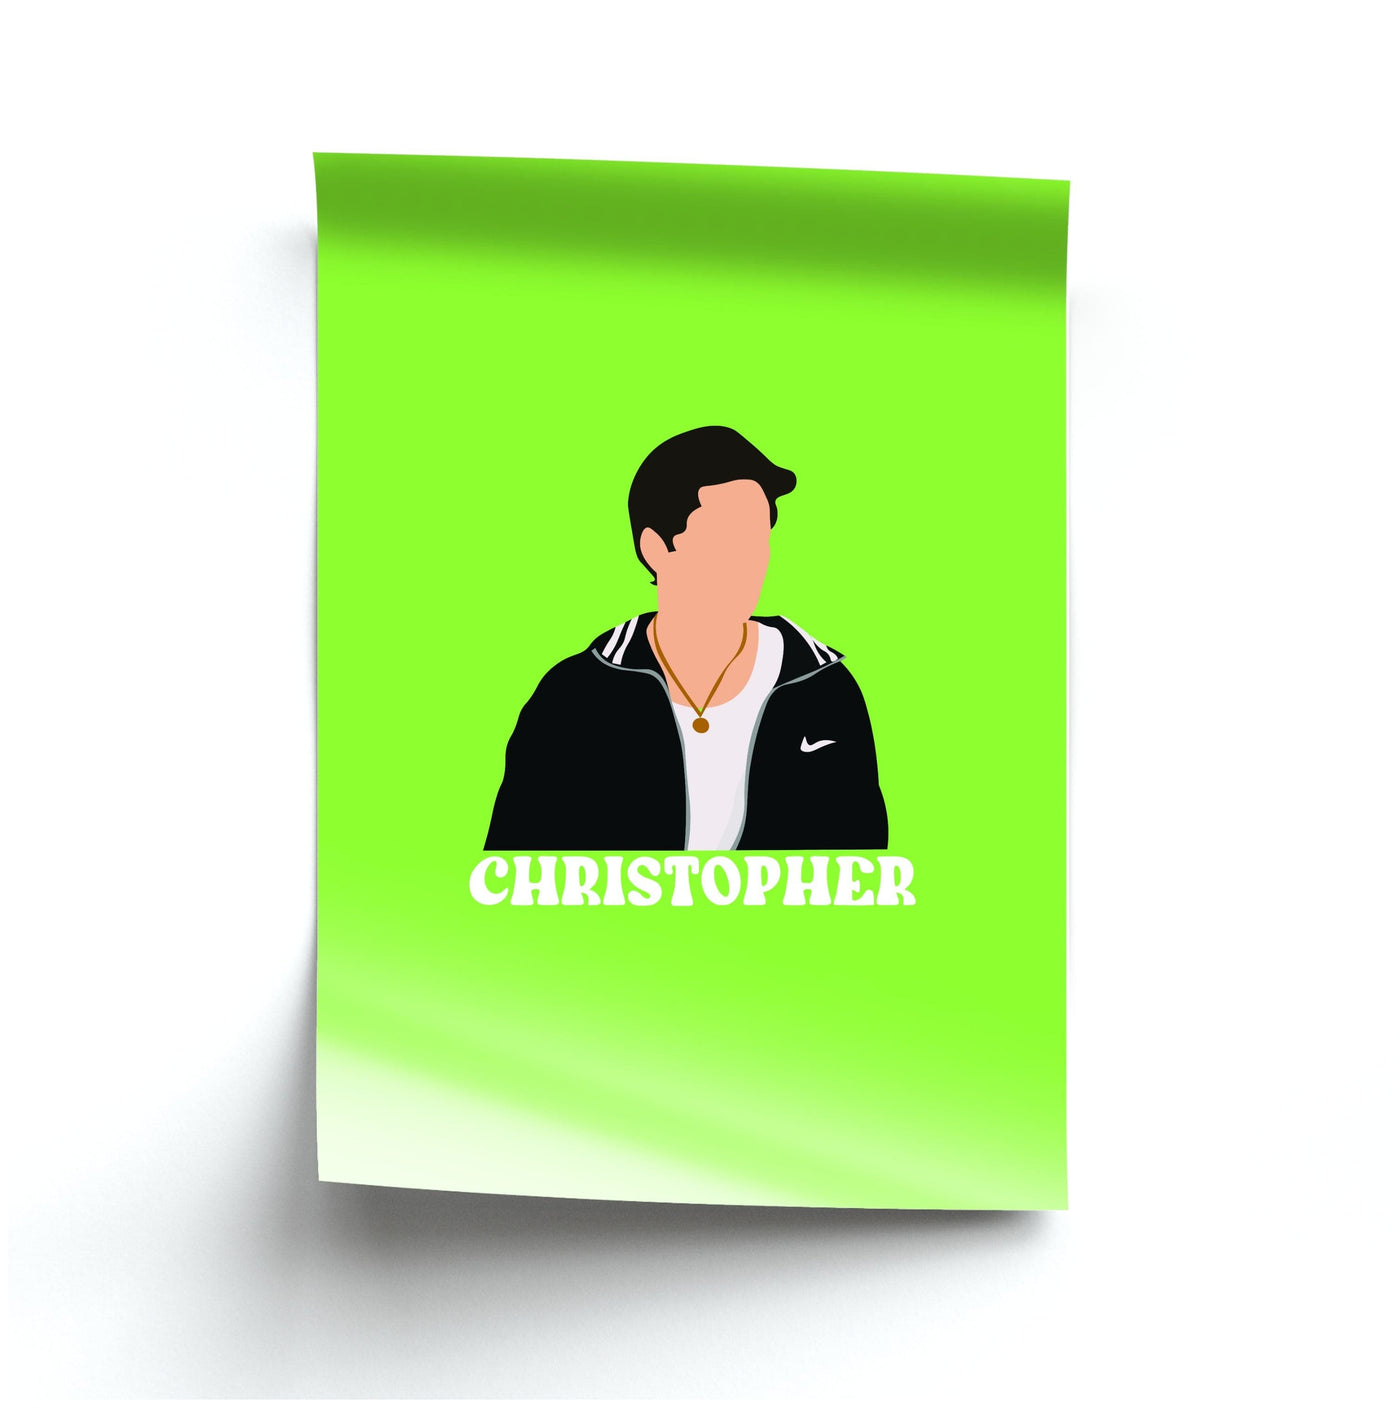 Cristopher - The Sopranos Poster